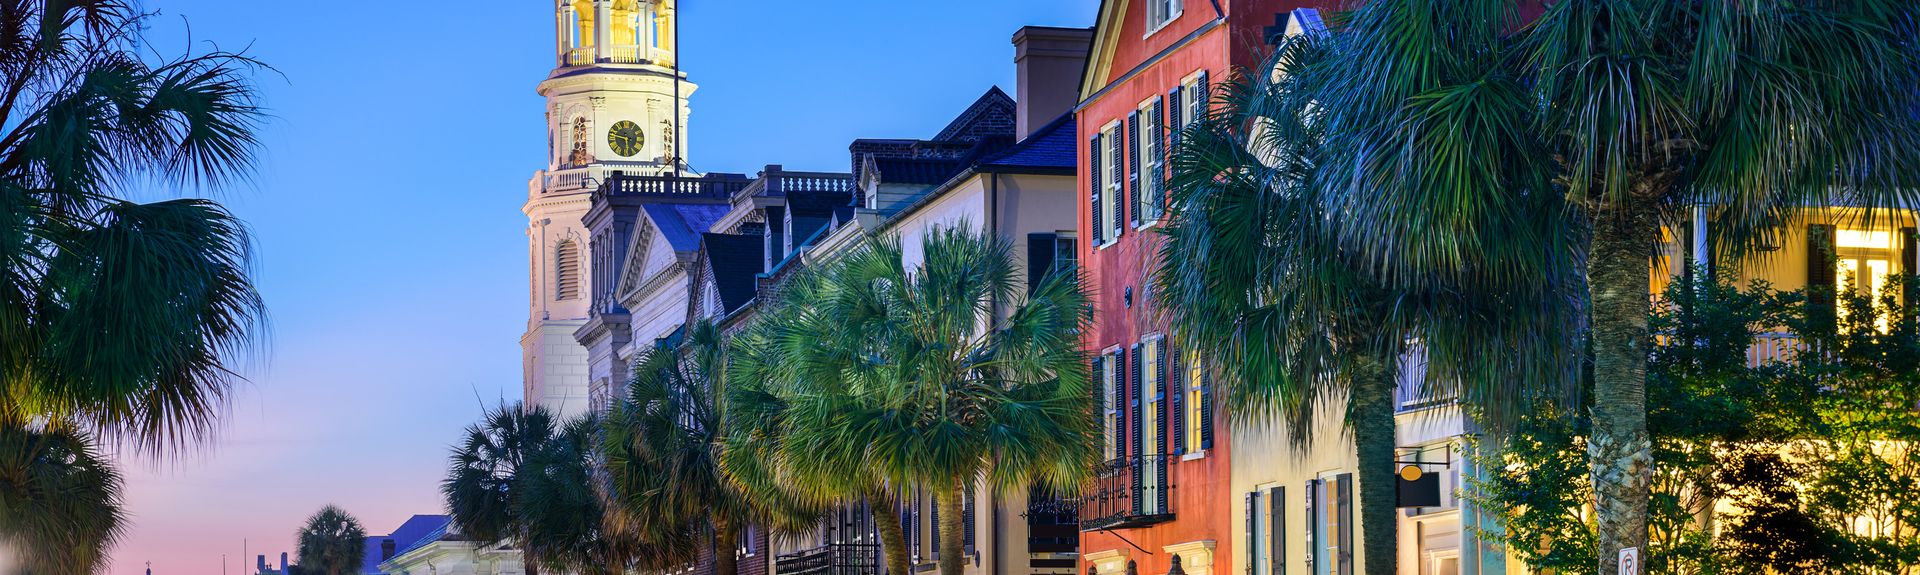 Vrbo South Carolina Us Vacation Rentals House Rentals More